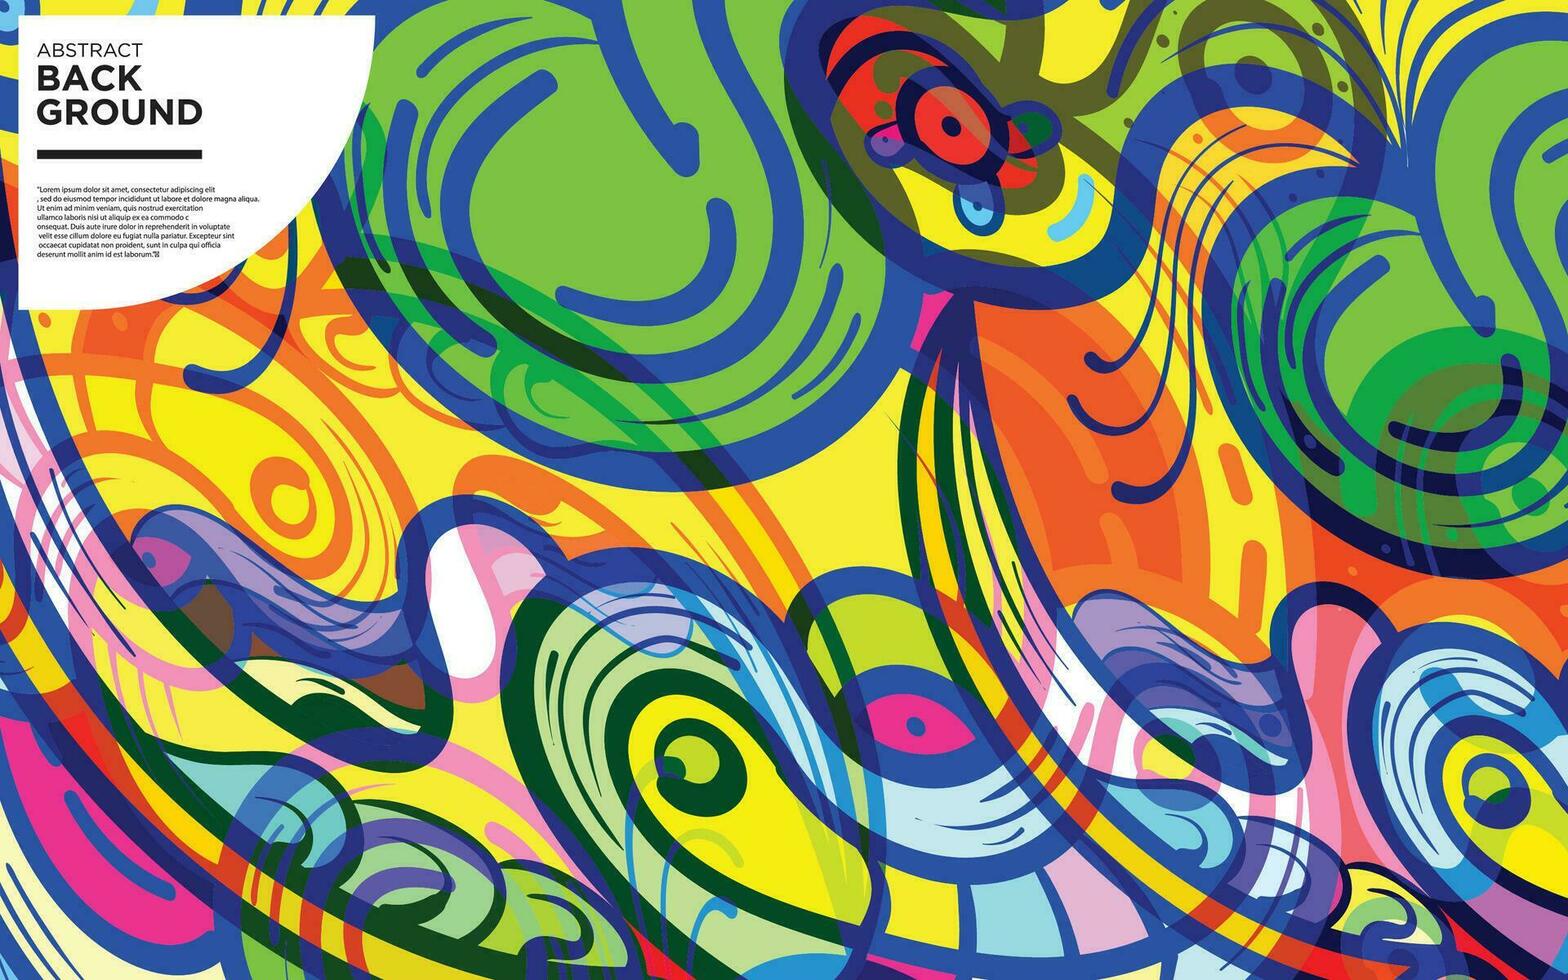 arte de vector de fondo de doodle abstracto colorido